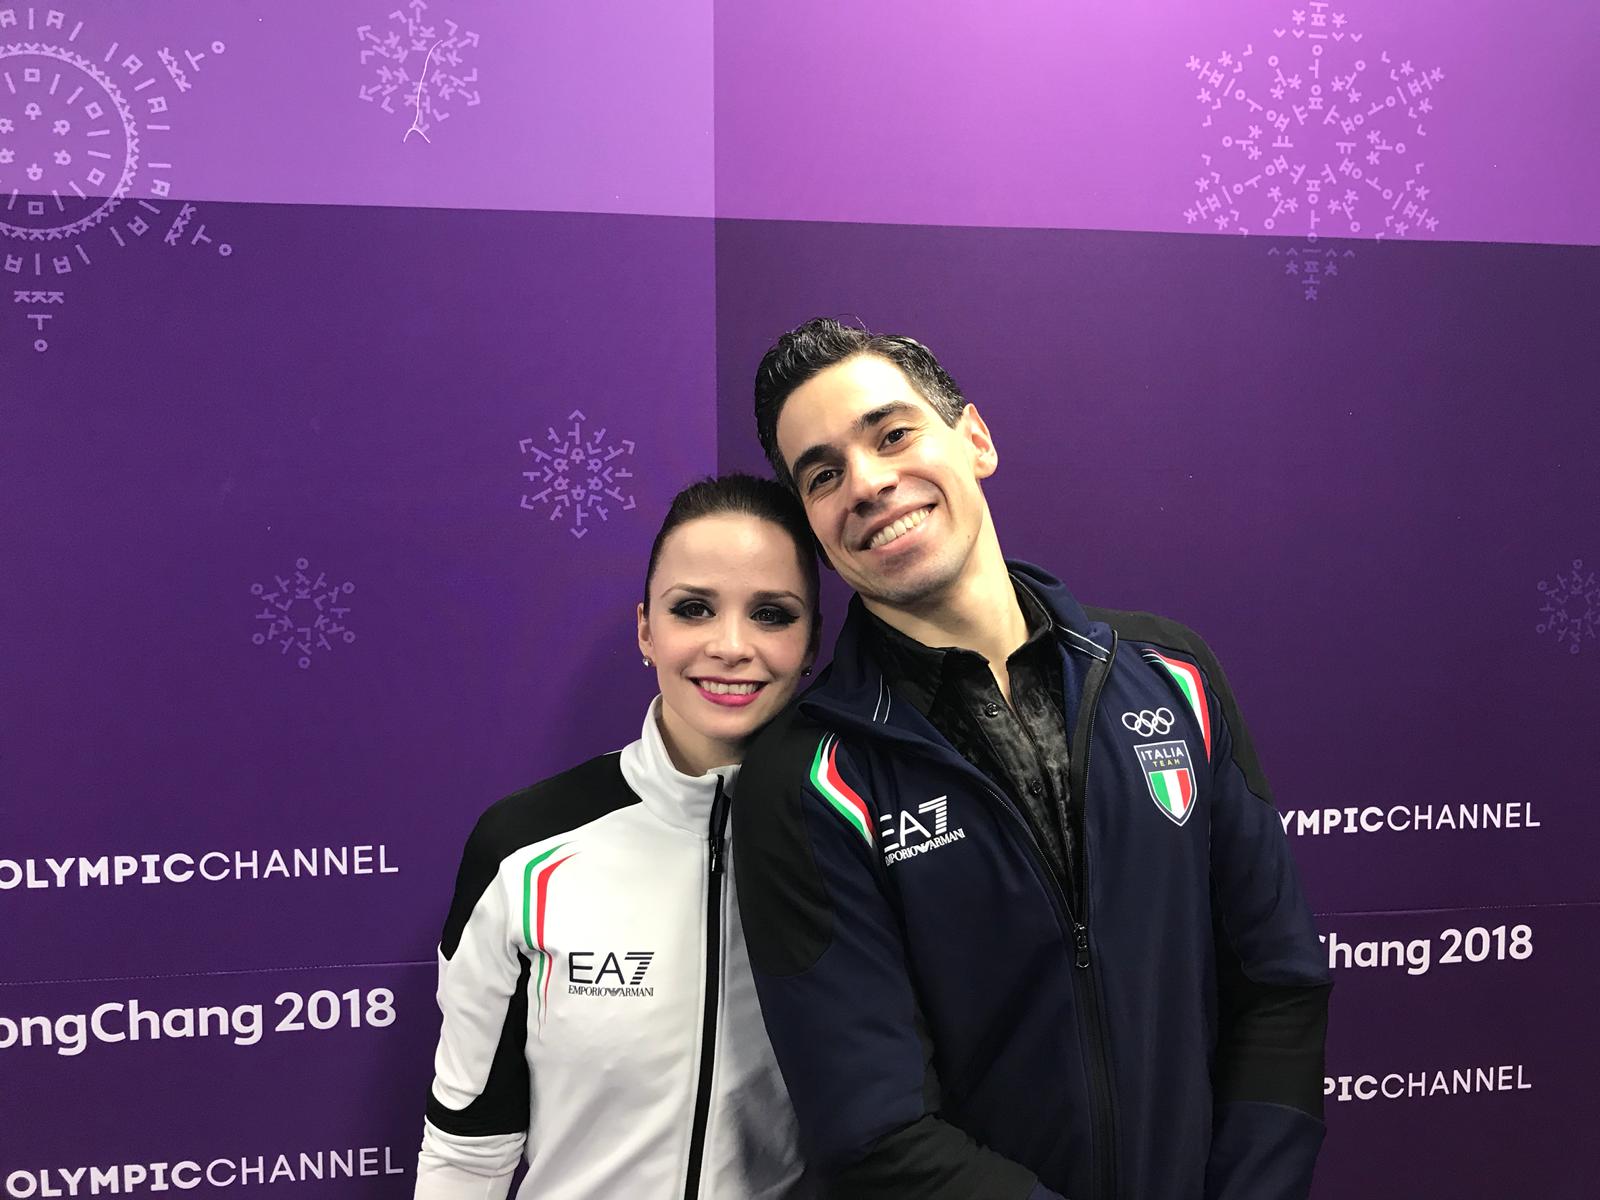 La coppia Cappellini-Lanotte alle Olimpiadi invernali 2018